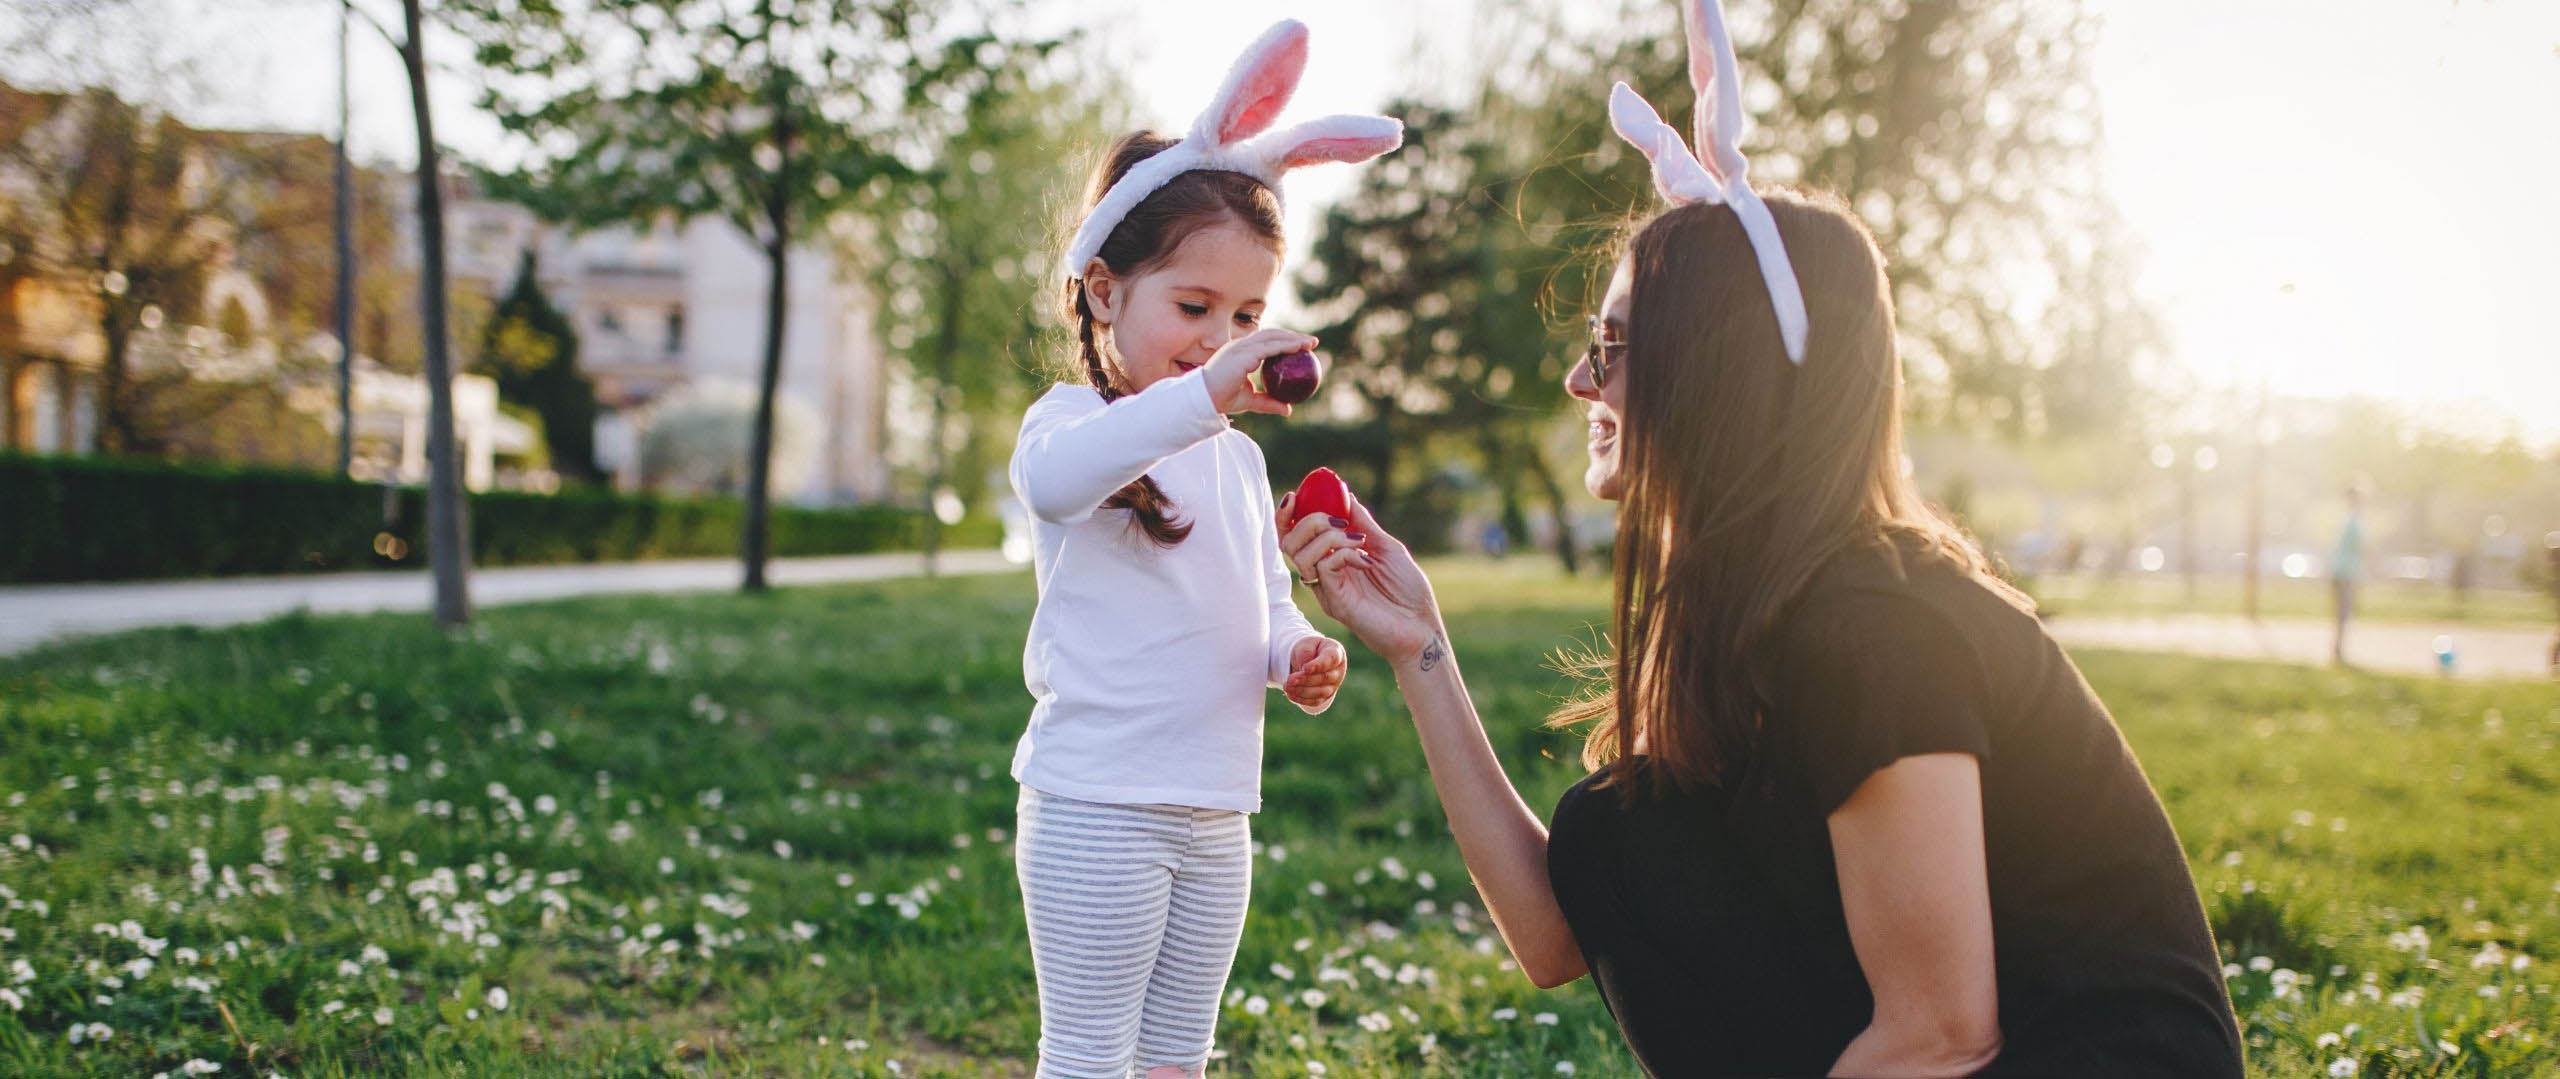 Cute little four year old girl enjoying Easter egg hunt in a public park